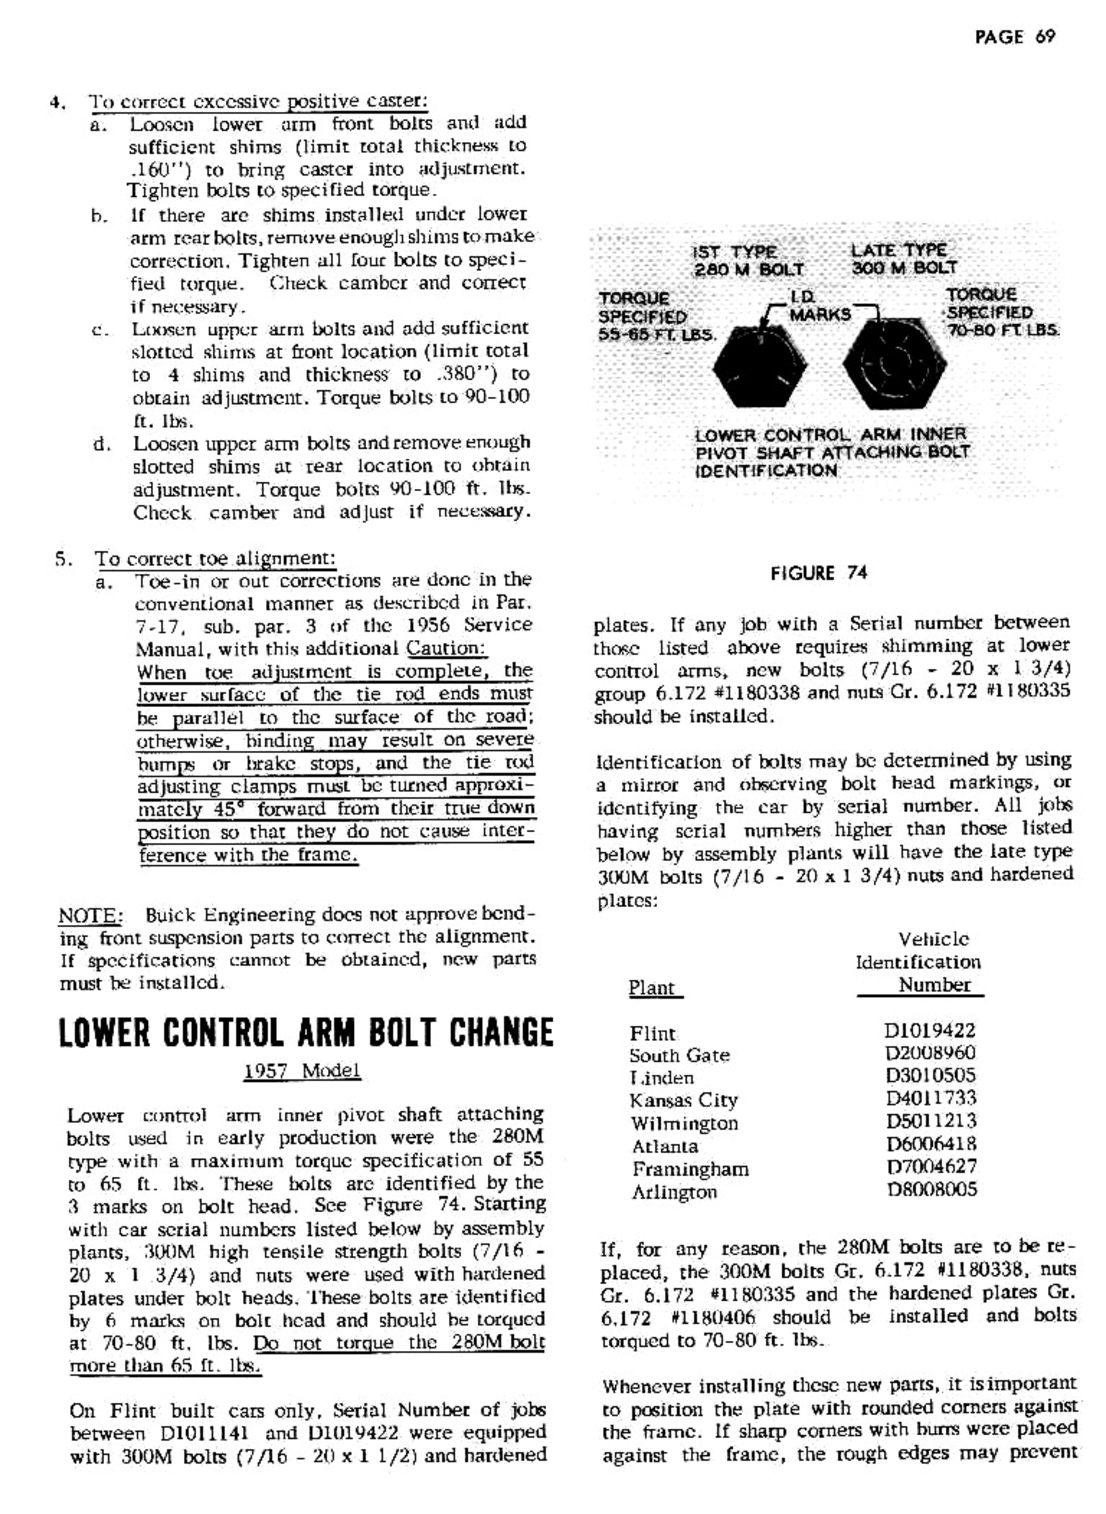 n_1957 Buick Product Service  Bulletins-074-074.jpg